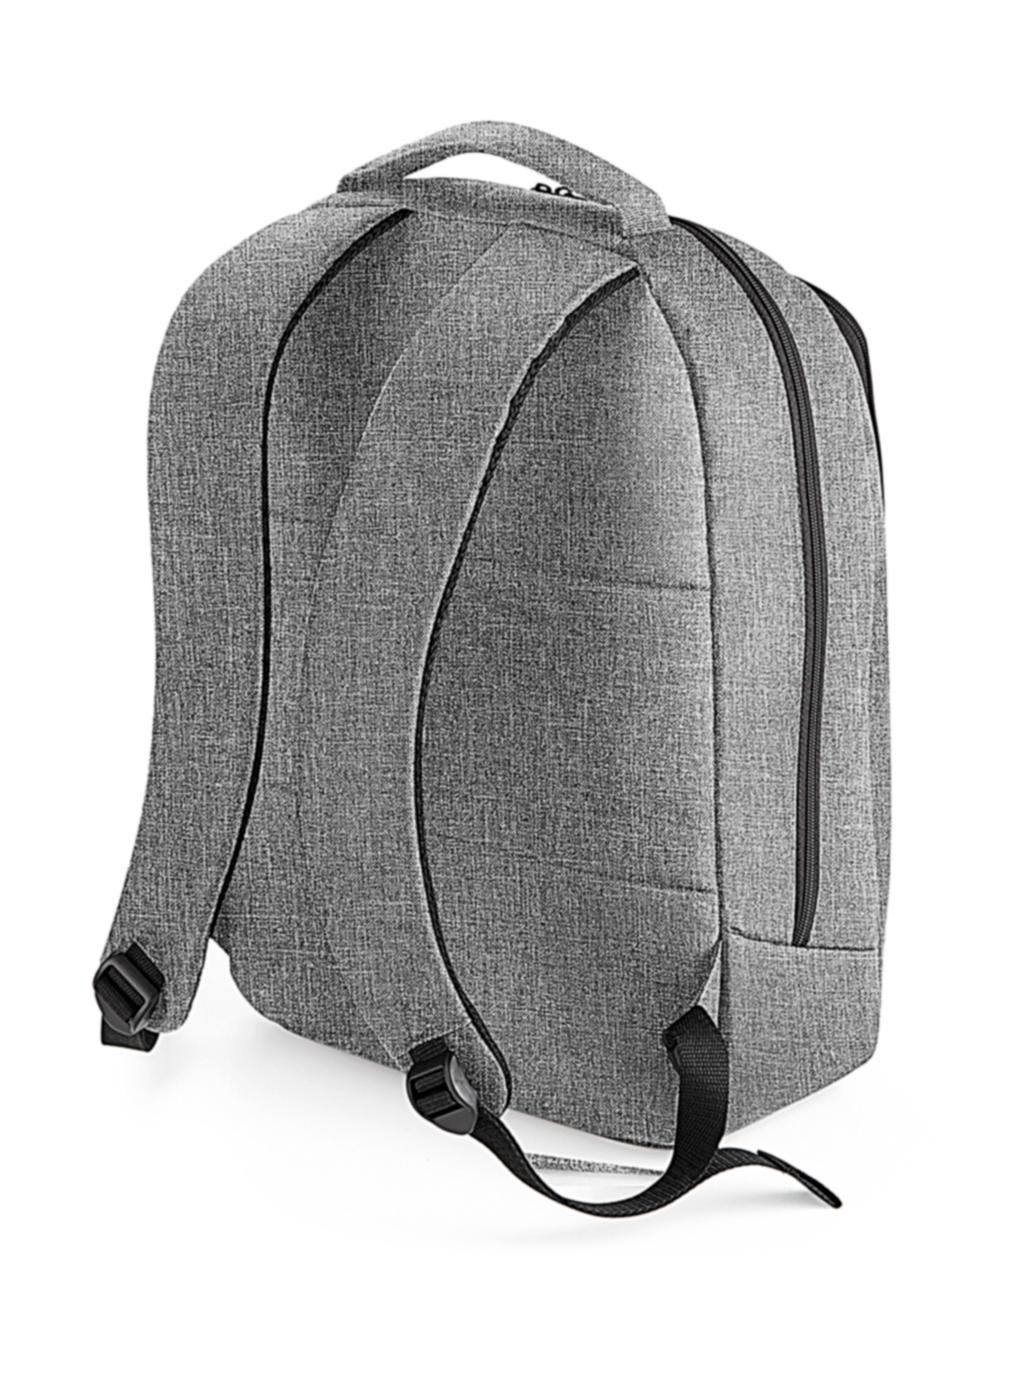  Executive Digital Backpack in Farbe Black